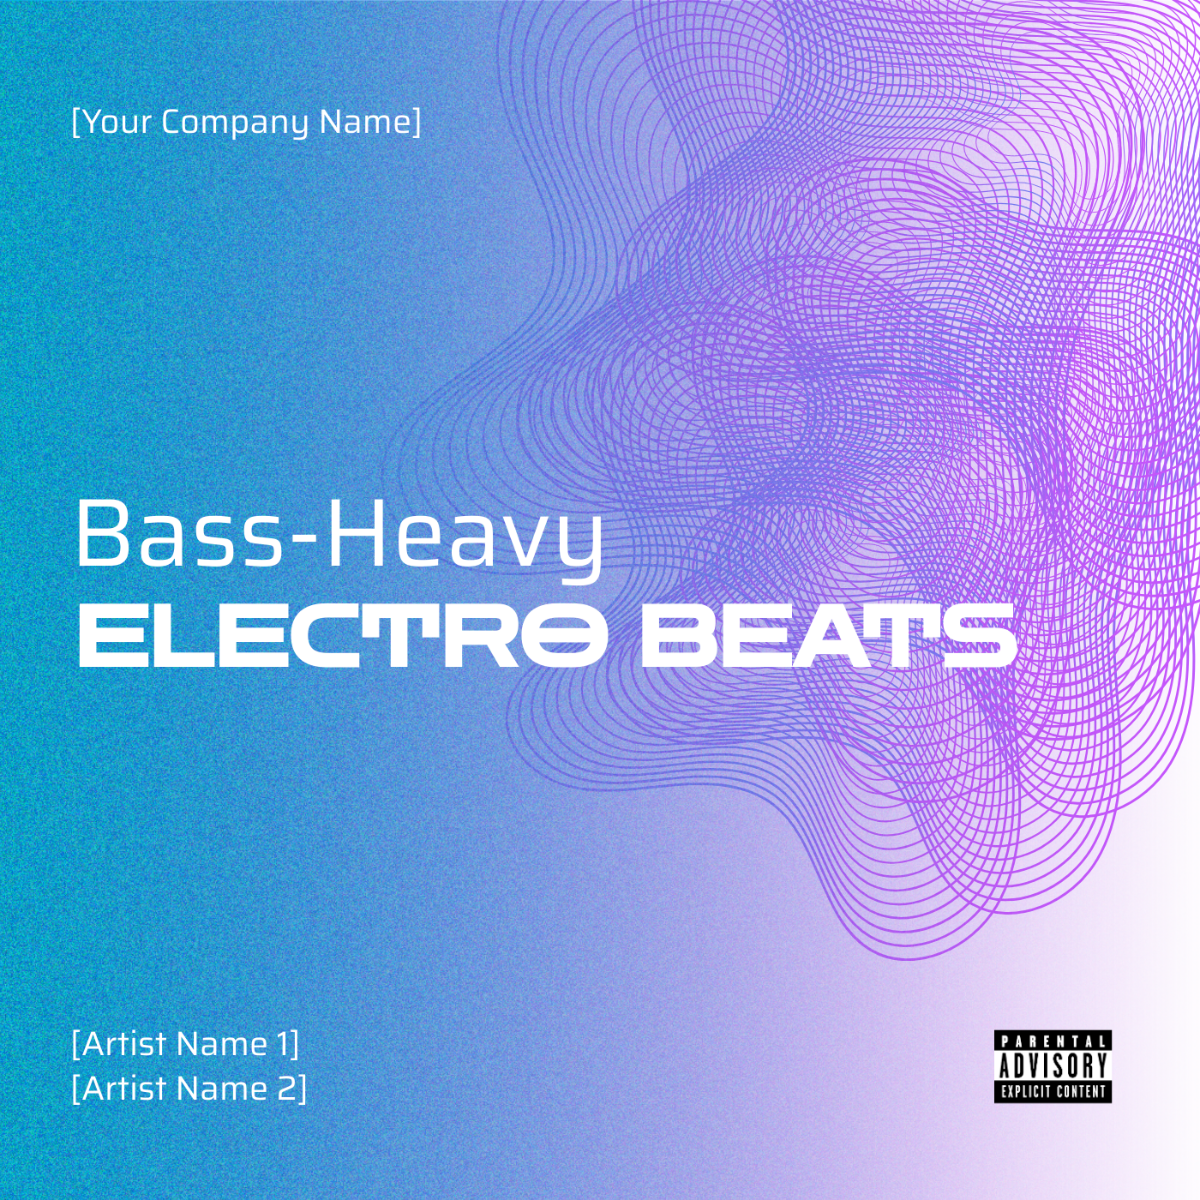 Electro Beats Album Cover Design